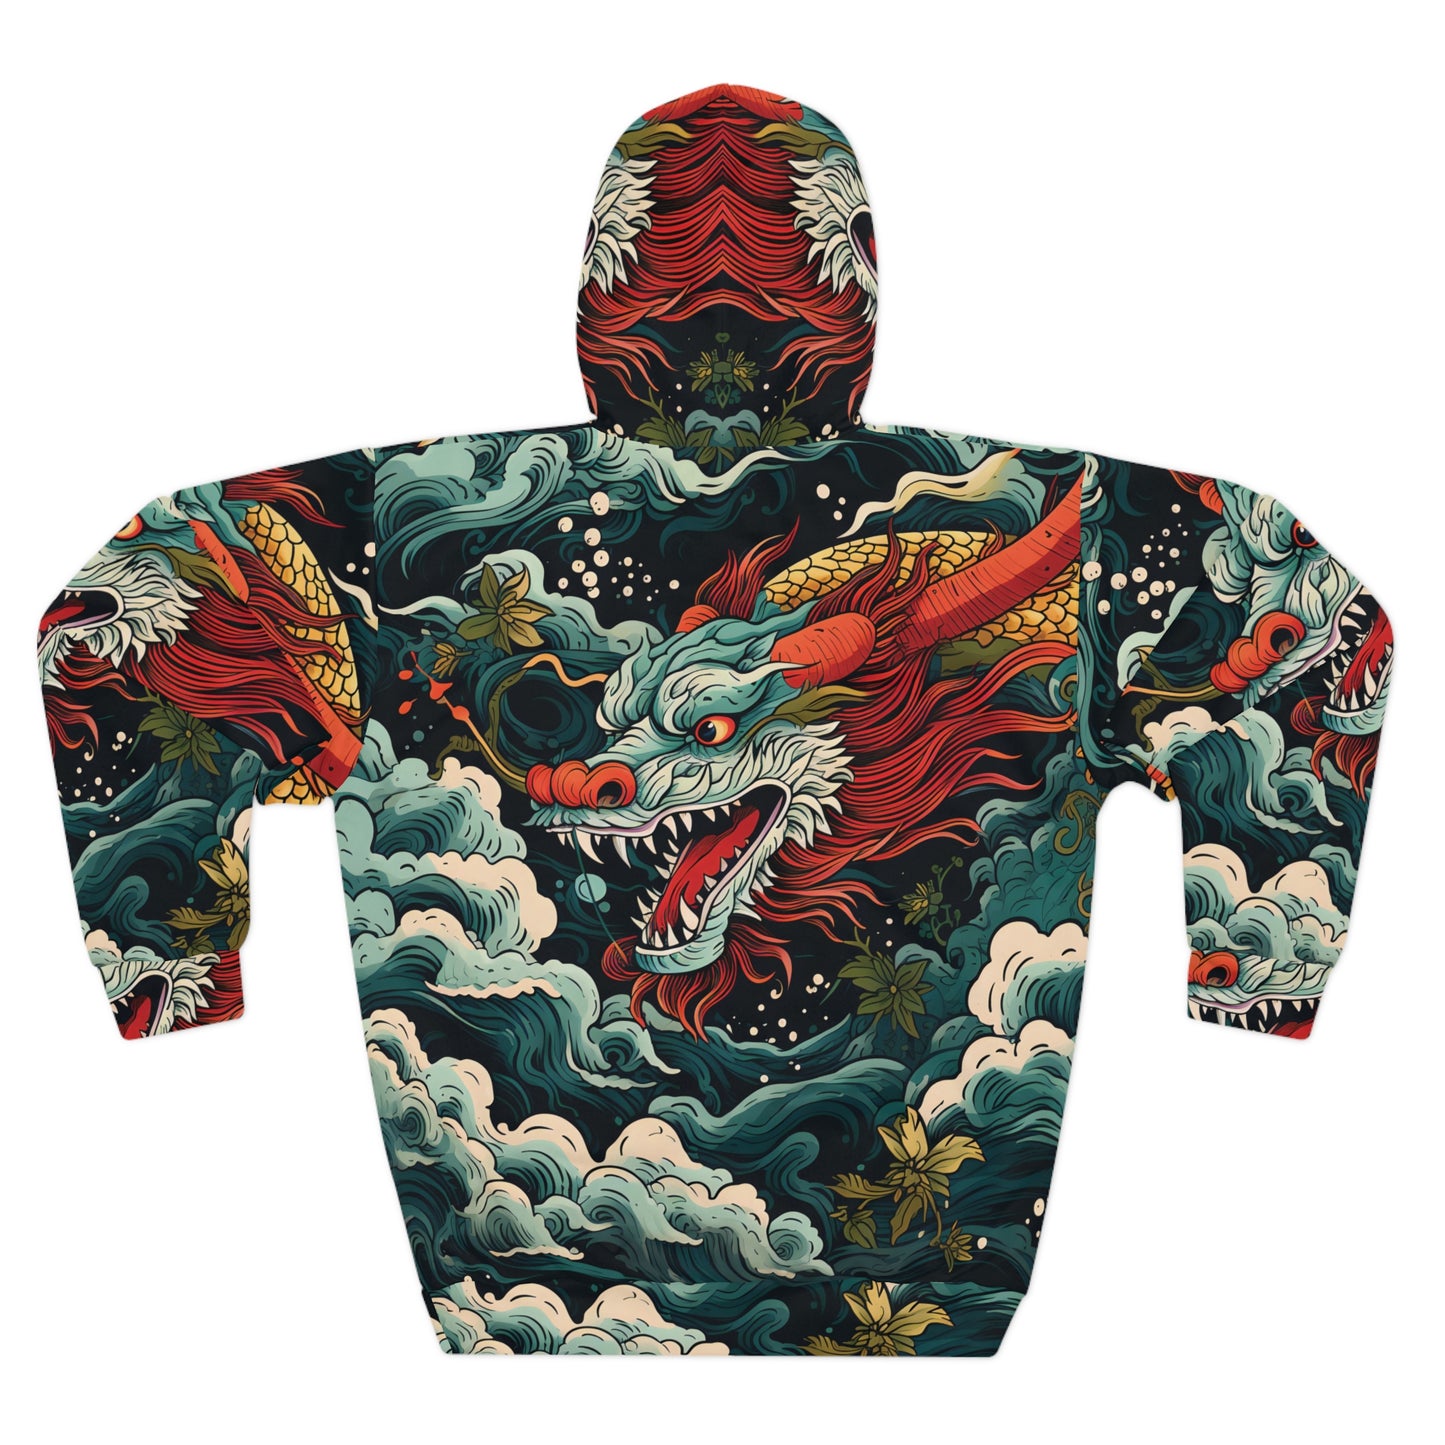 Charming Chinese Dragon Hoodie